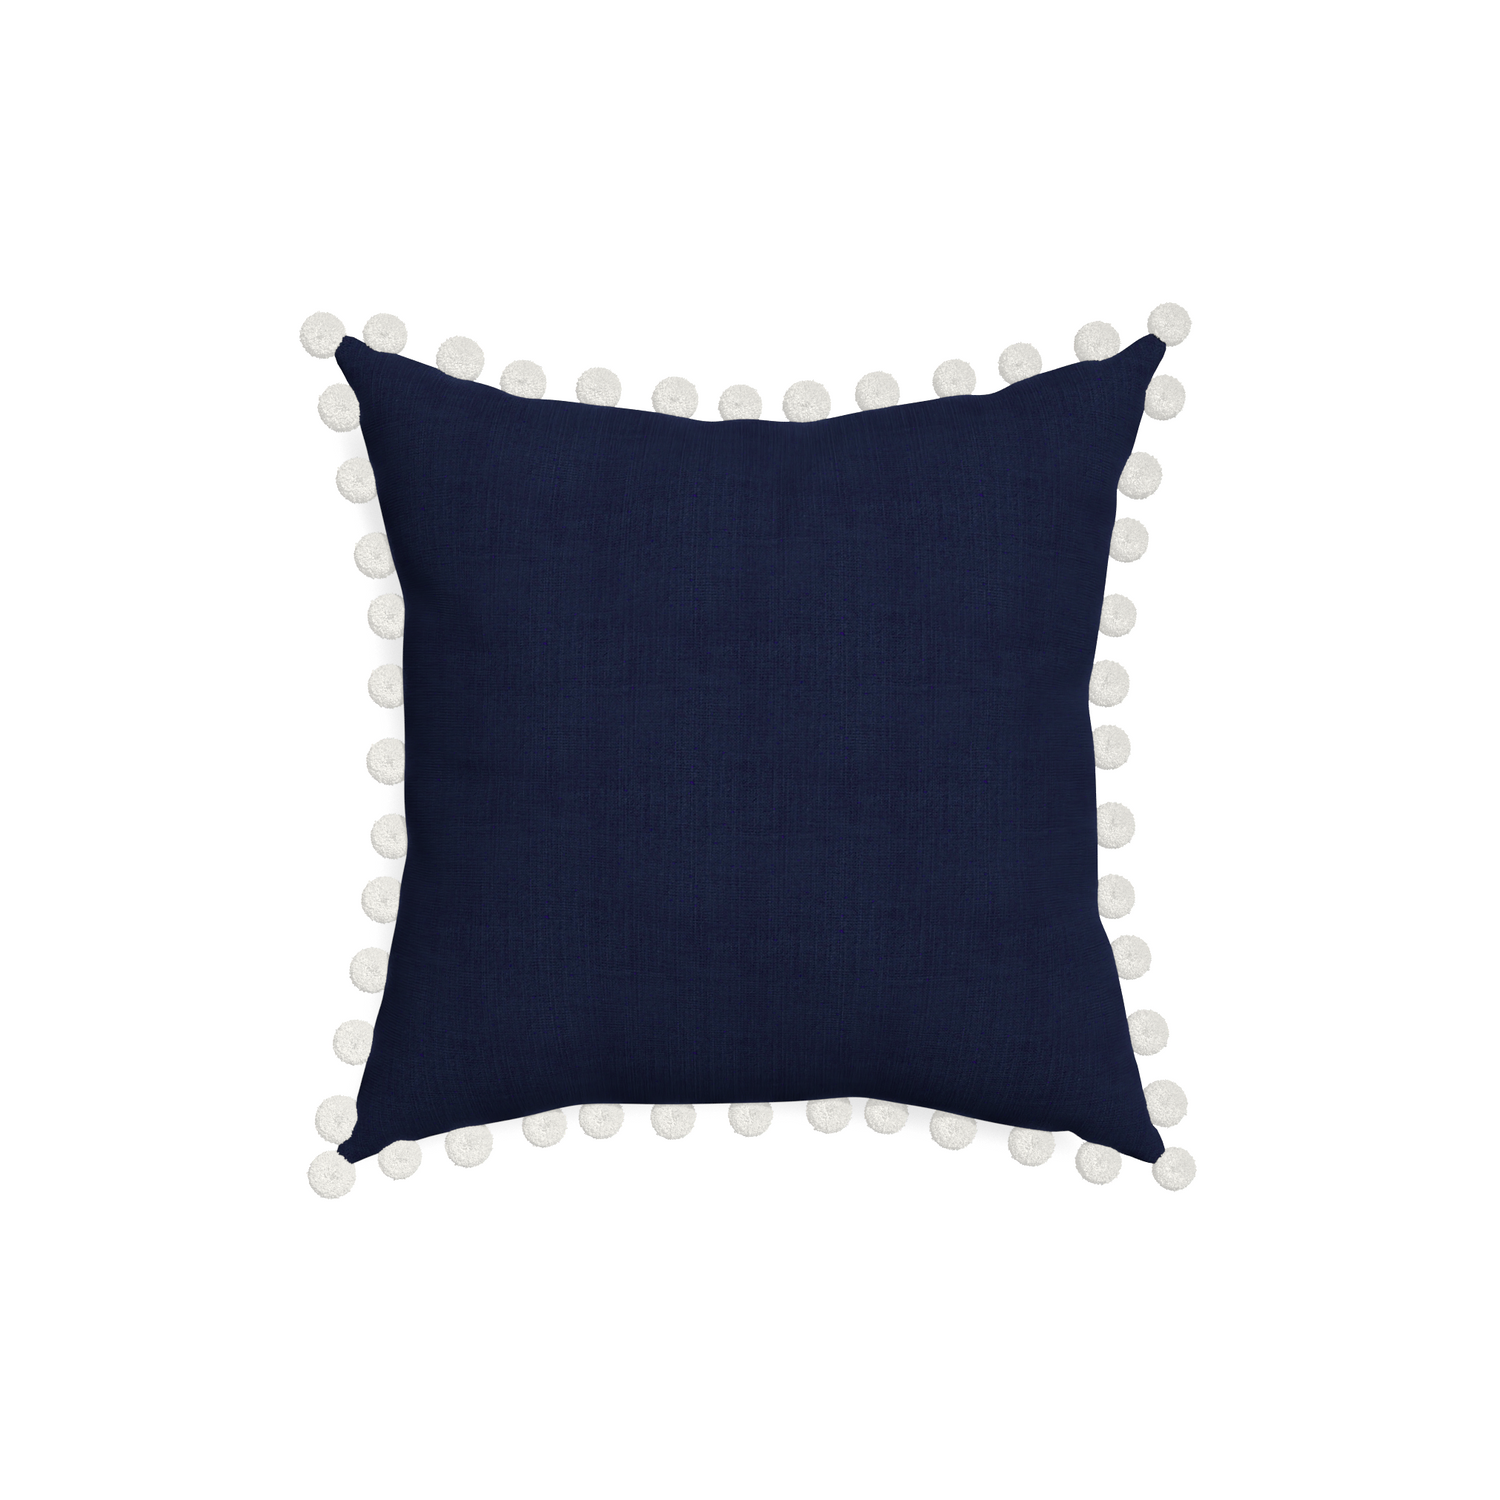 18-square midnight custom pillow with snow pom pom on white background